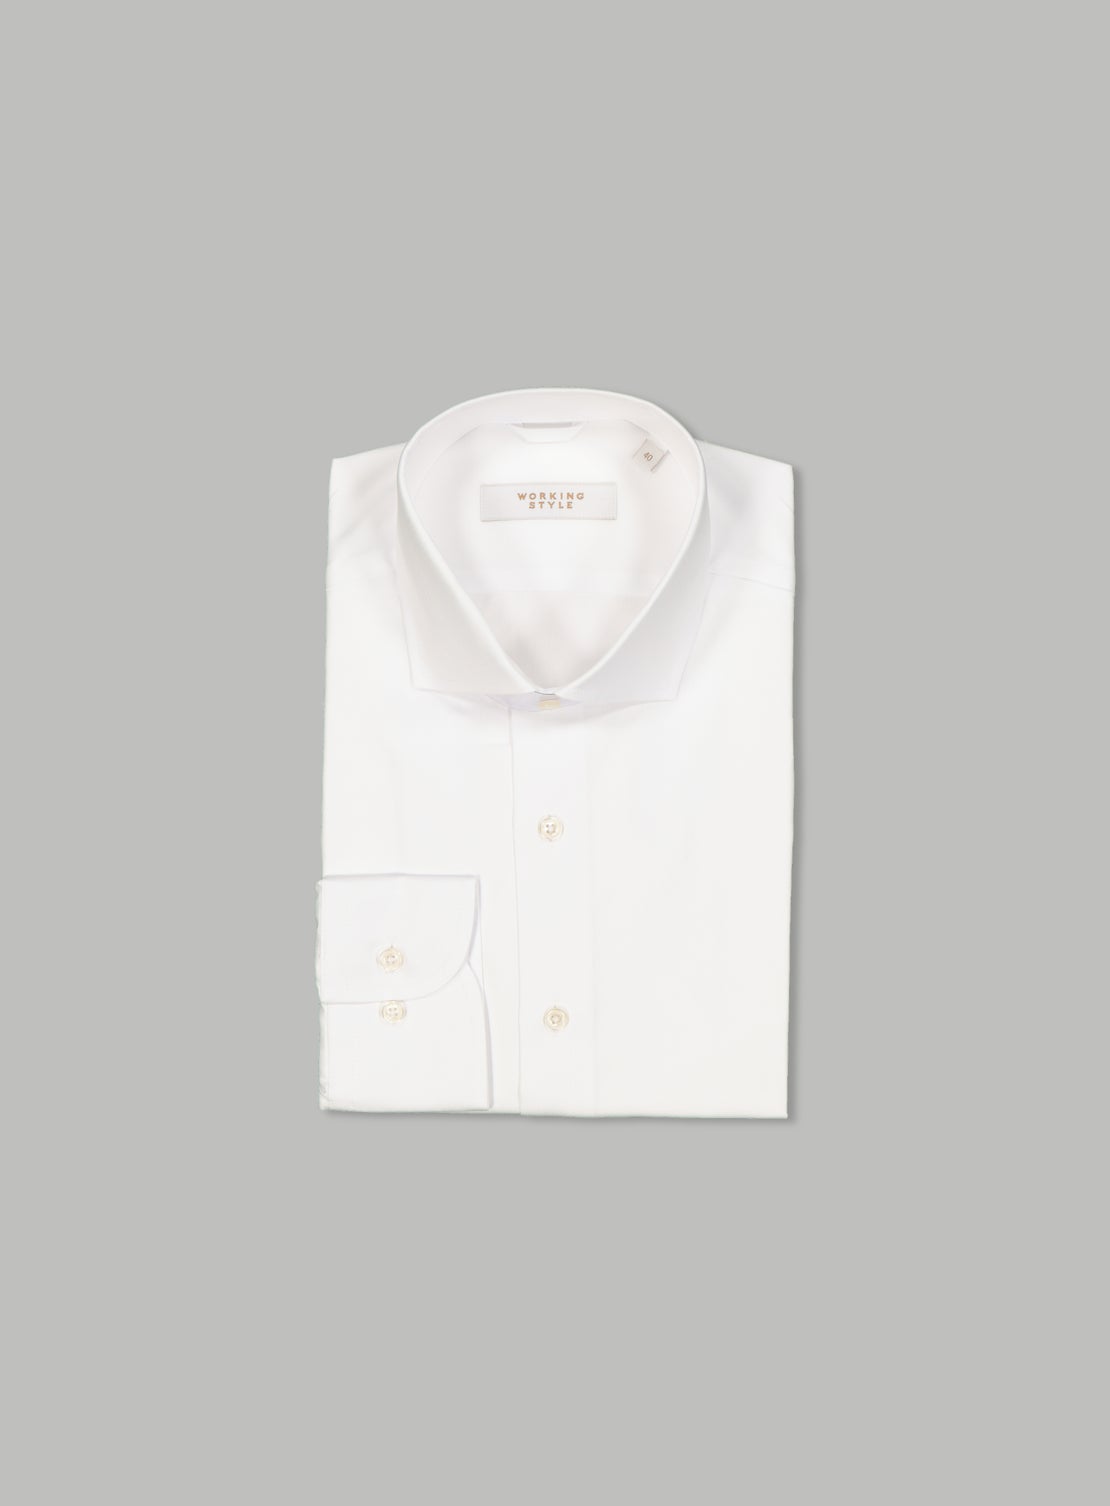 DM Classic White Shirt